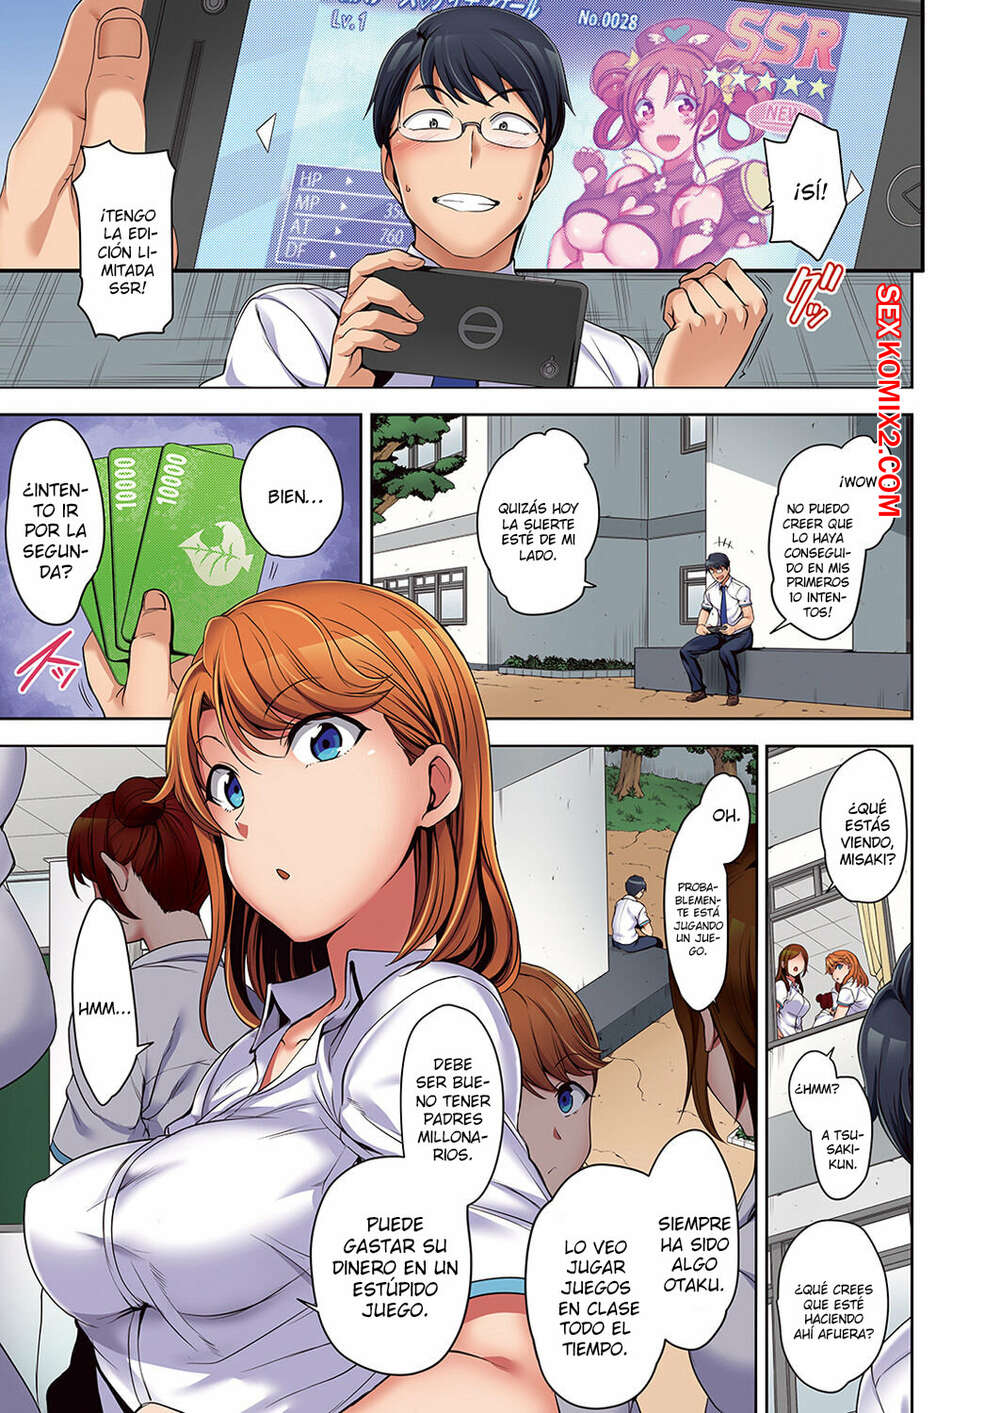 Anime sexo comics